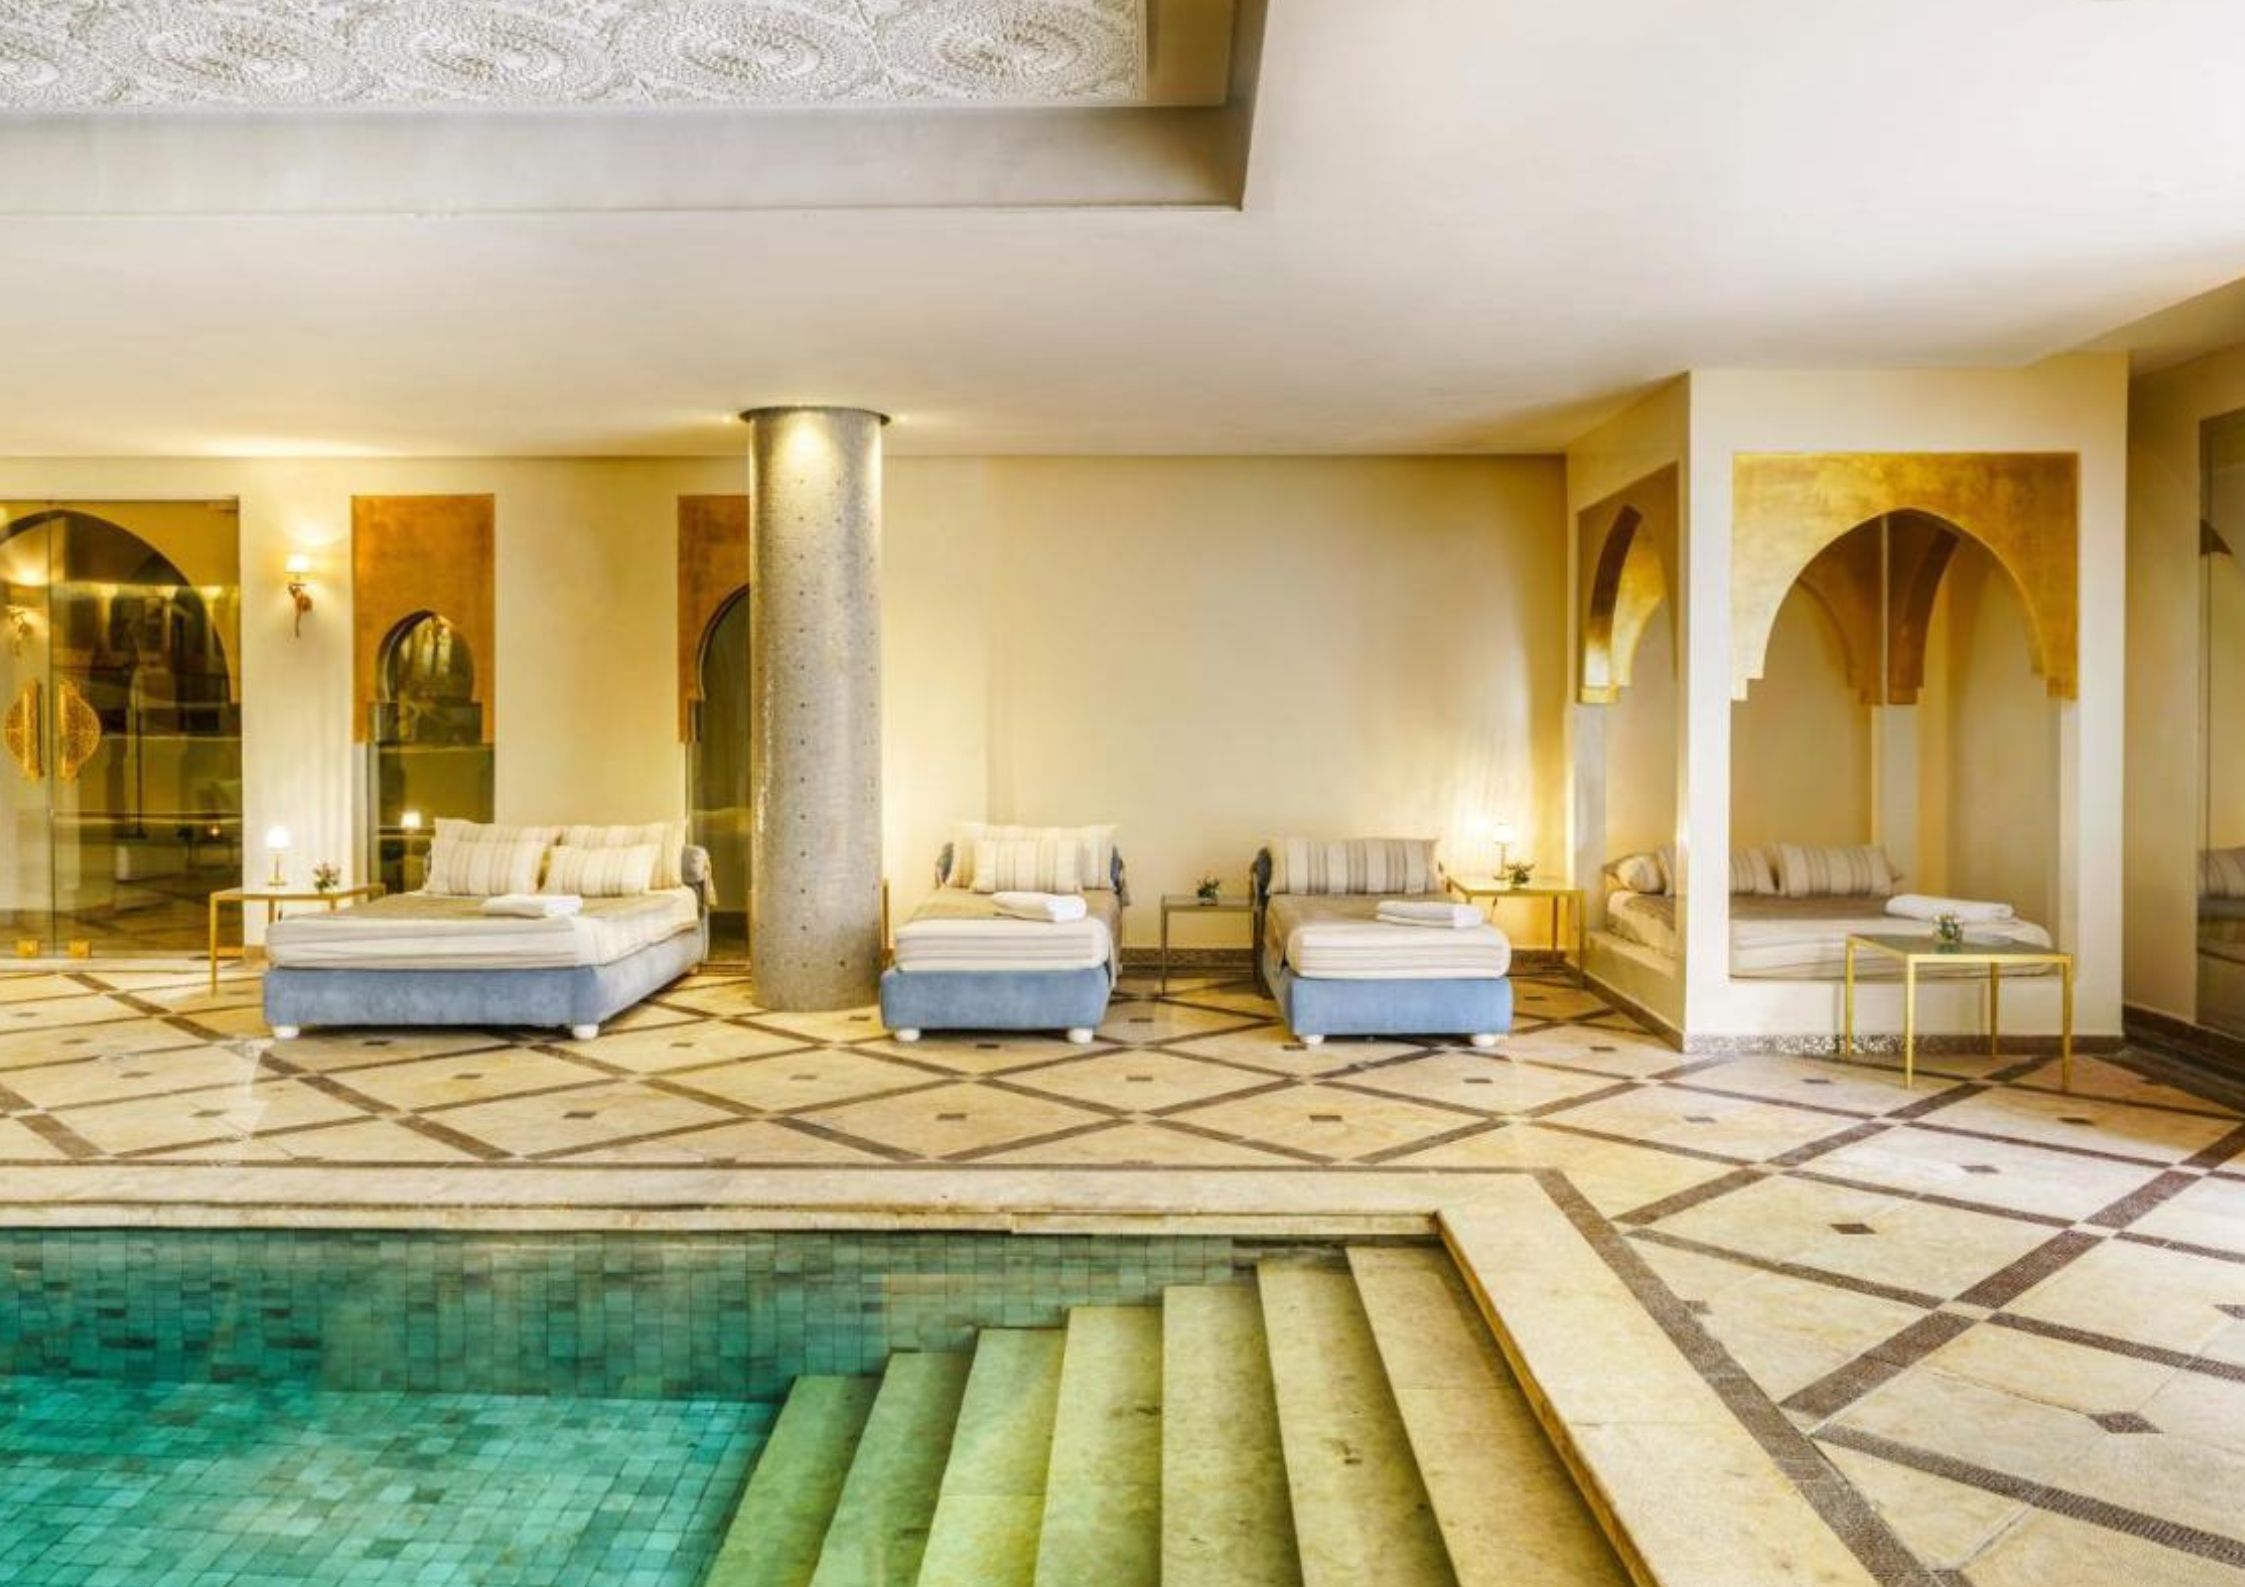 sofitel marrakech piscine- hotel 5 etoiles